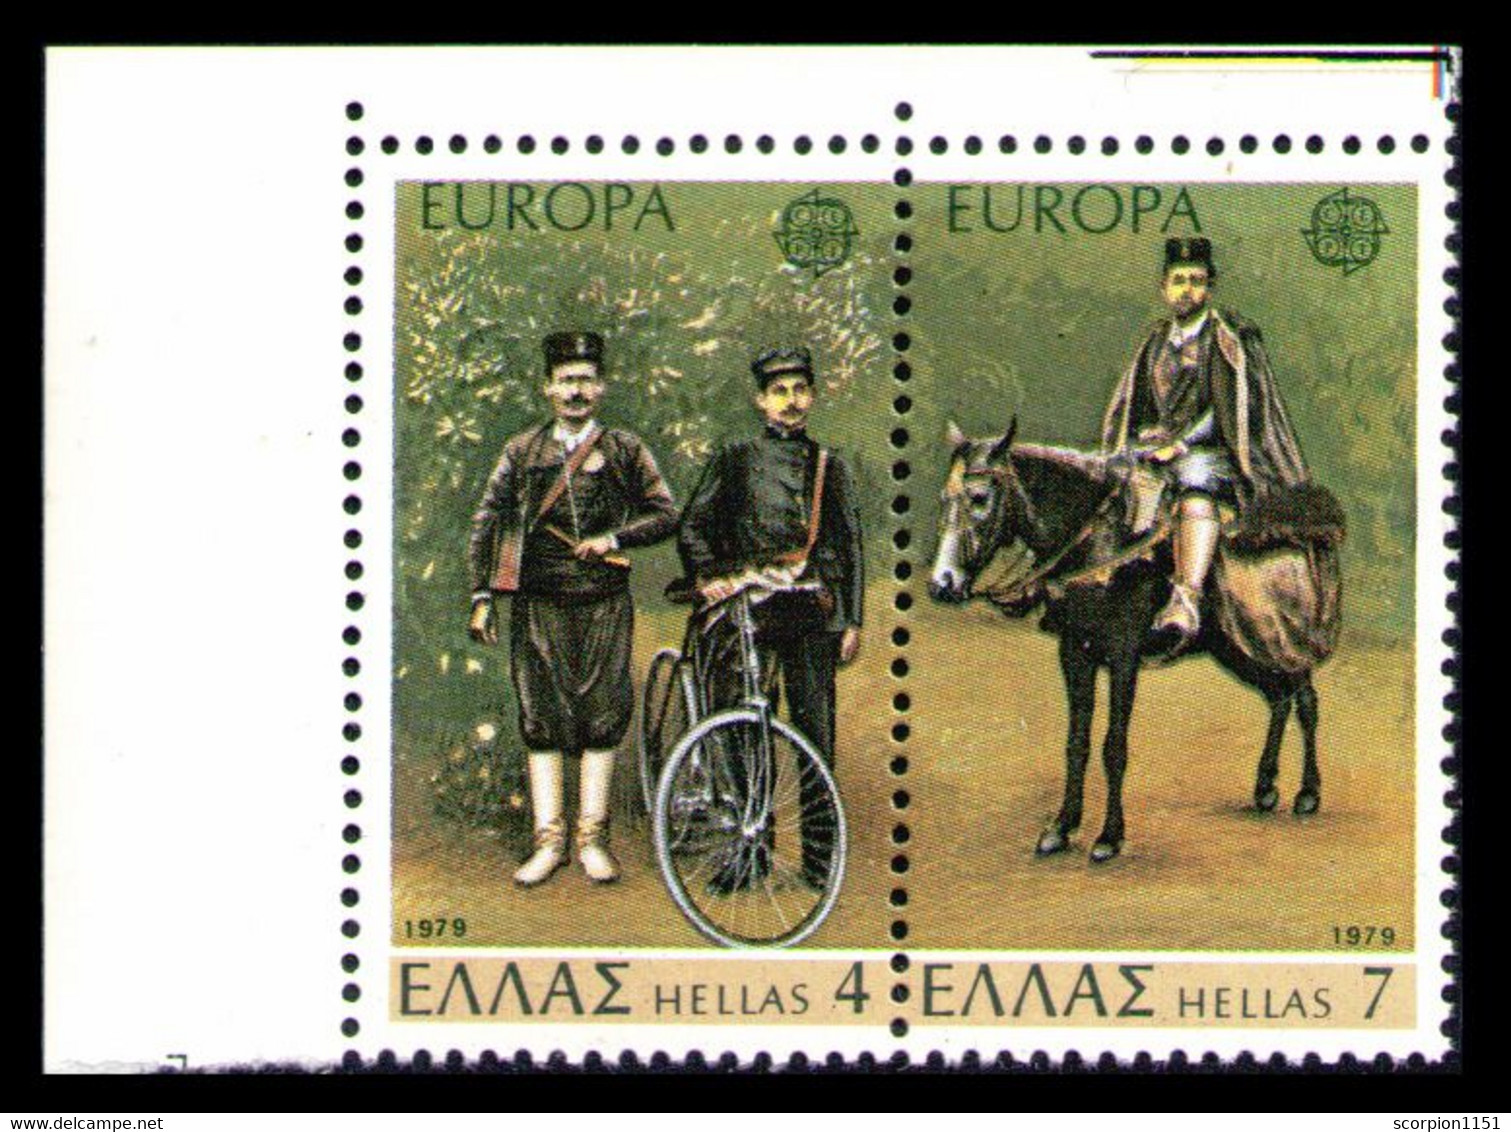 GREECE 1979 - EUROPA Set MNH** - Unused Stamps